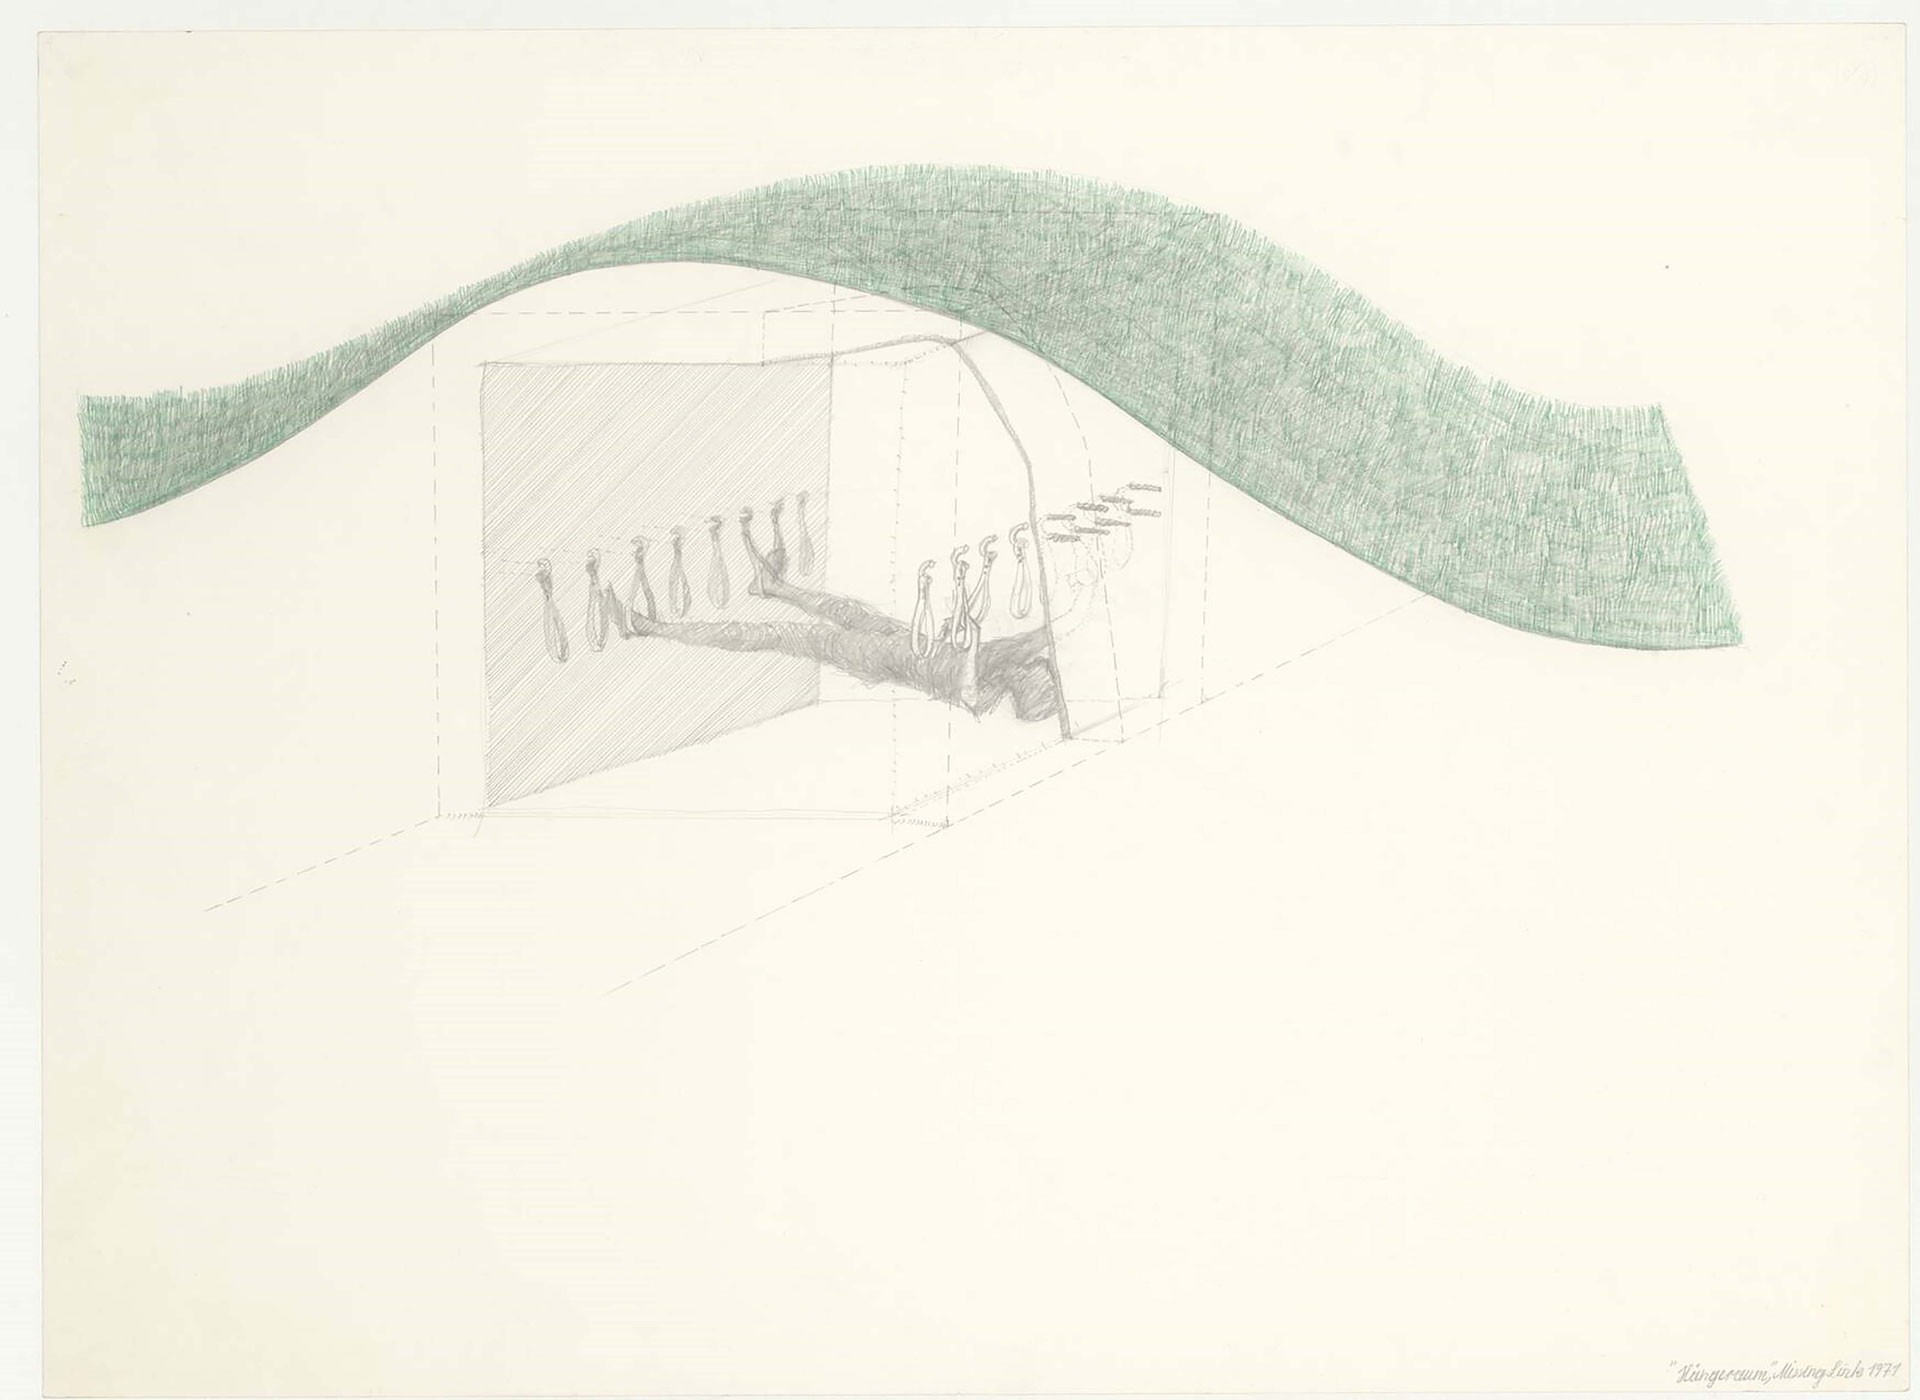 <BODY><div>Missing Link, Hängeraum [Hanging Space], drawing, 1971</div><div>© MAK</div></BODY>